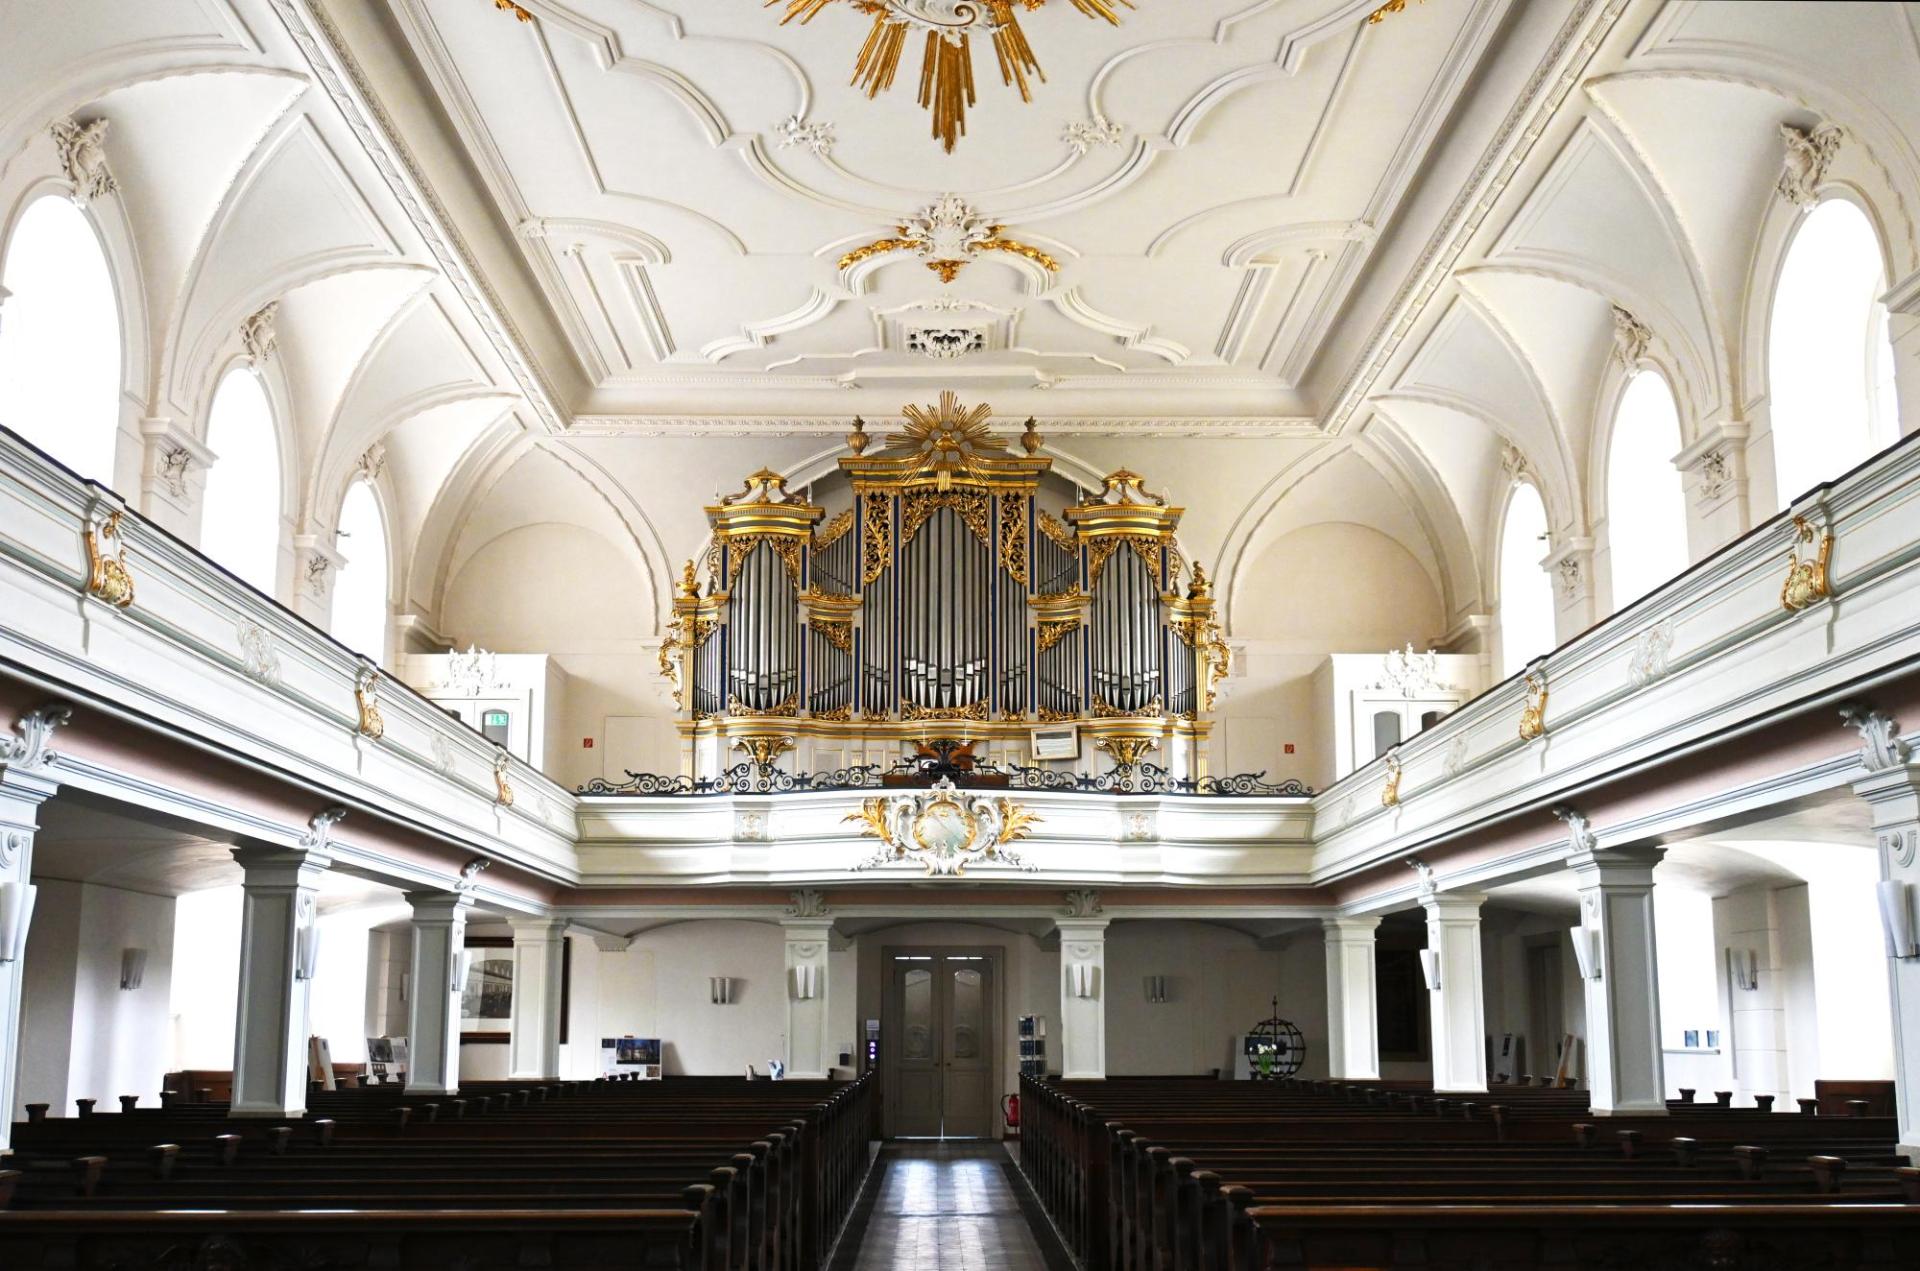 The organ of Sophienkirche